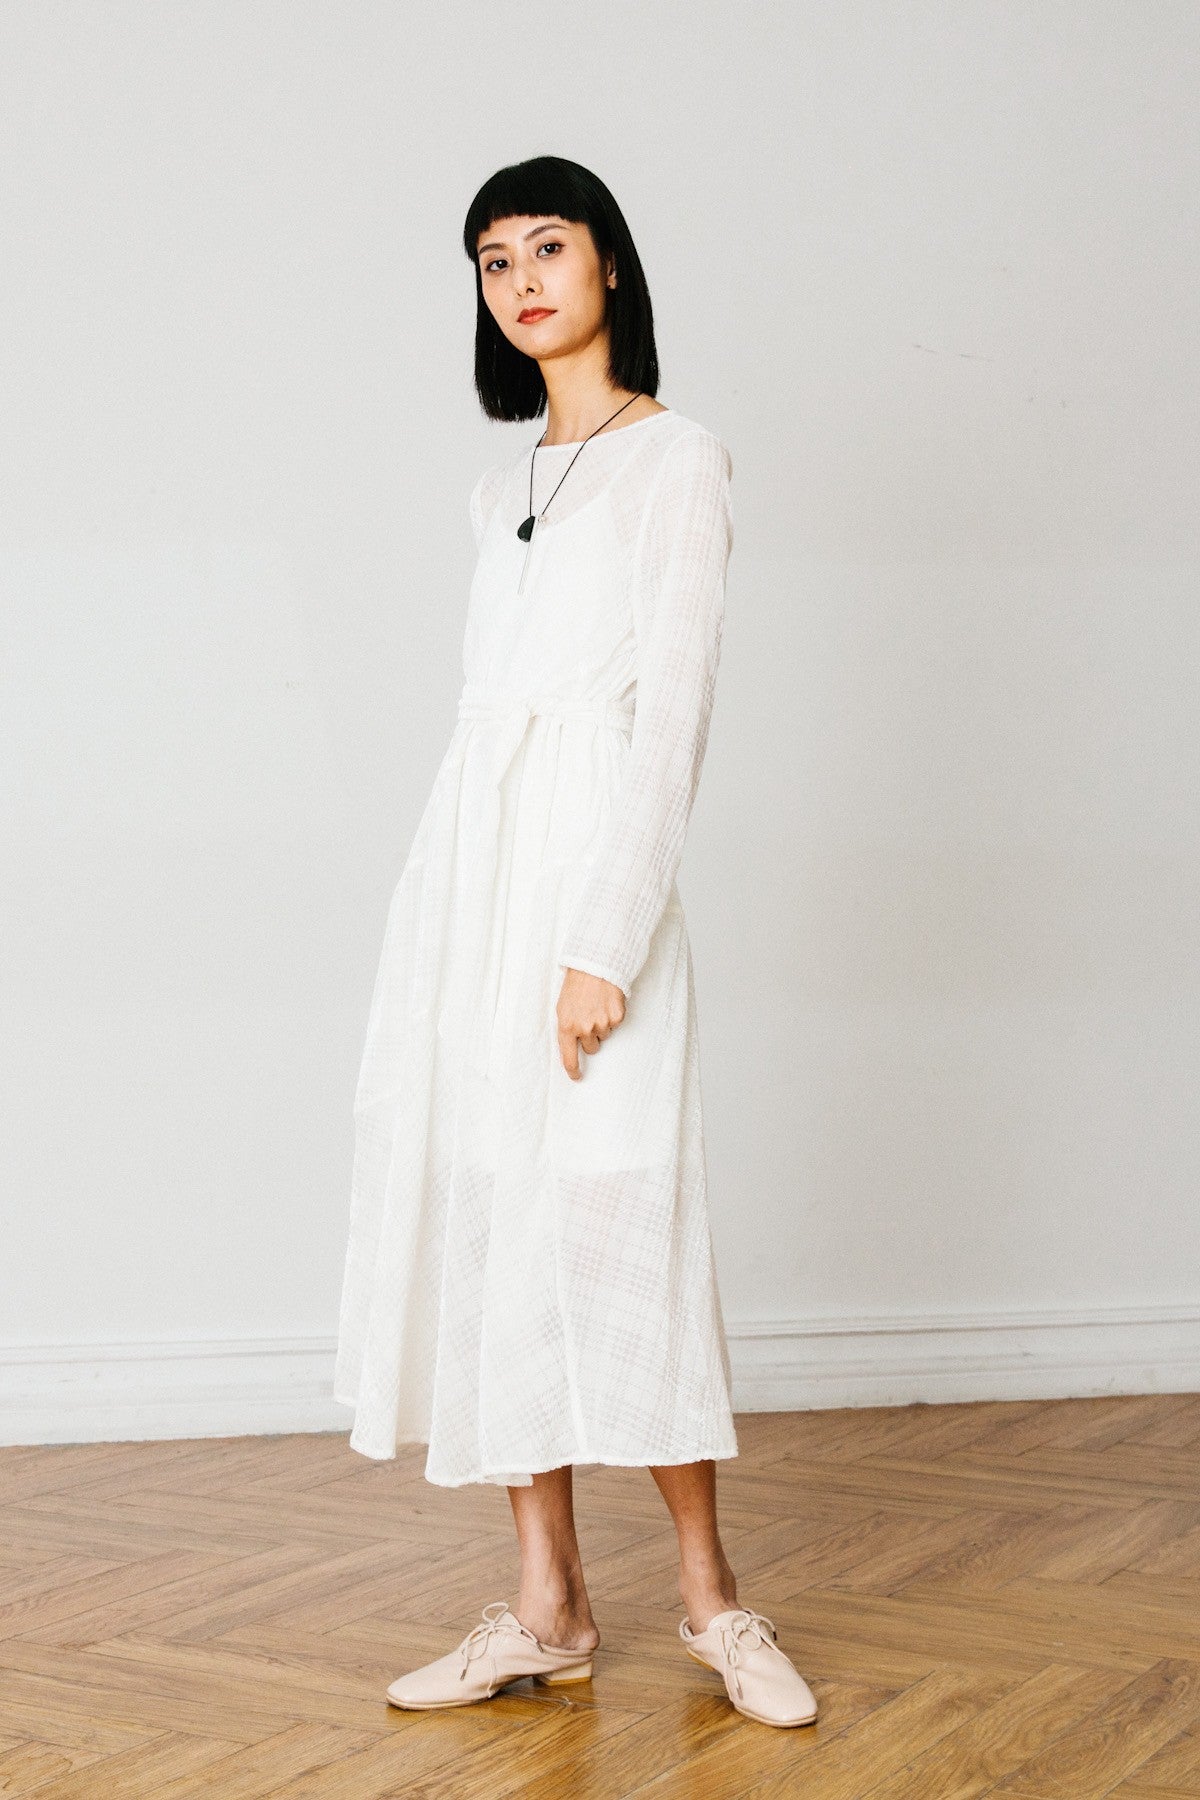 SKYE San Francisco SF California shop ethical sustainable modern chic minimalist luxury clothing women fashion Dezi Dress white 6